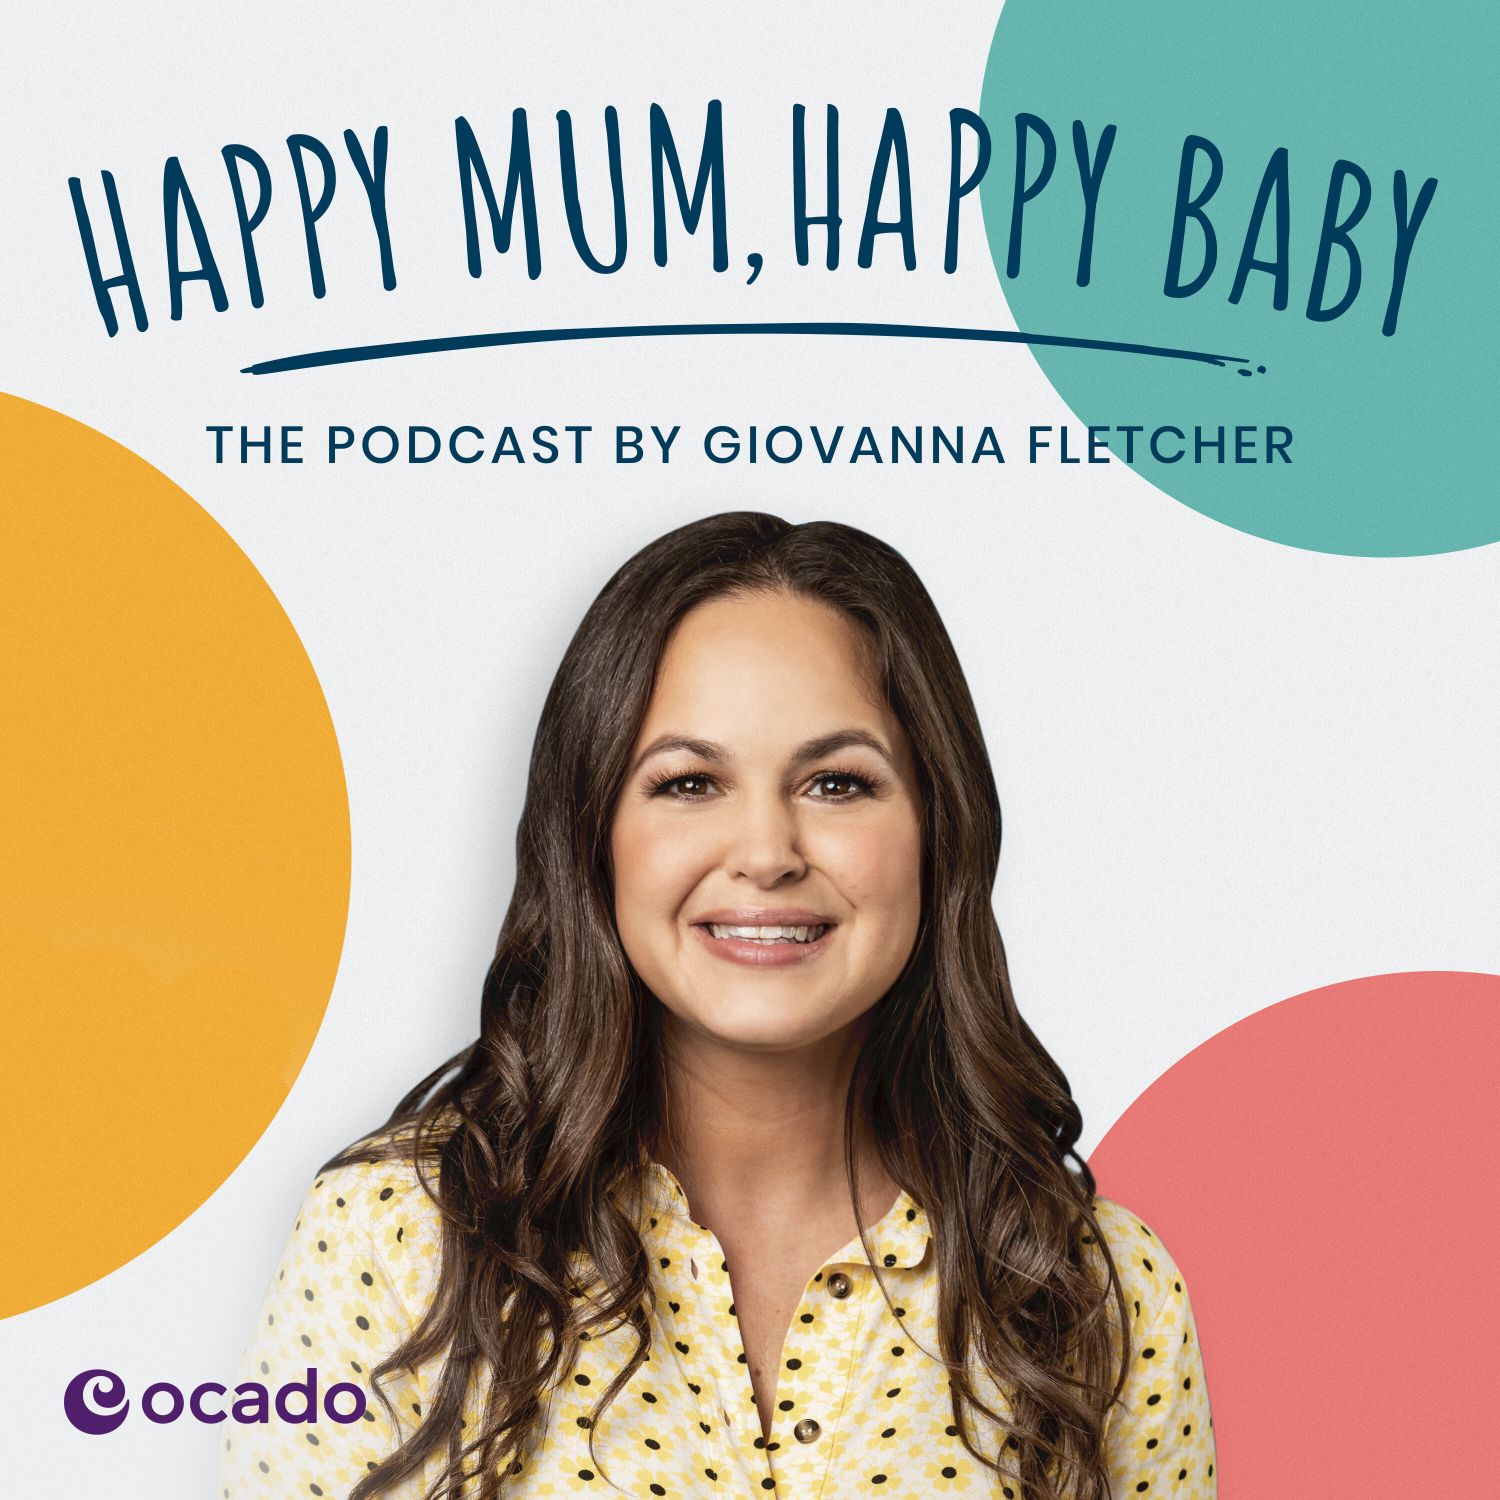 Happy Mum, Happy Baby - Giovanna Fletcher